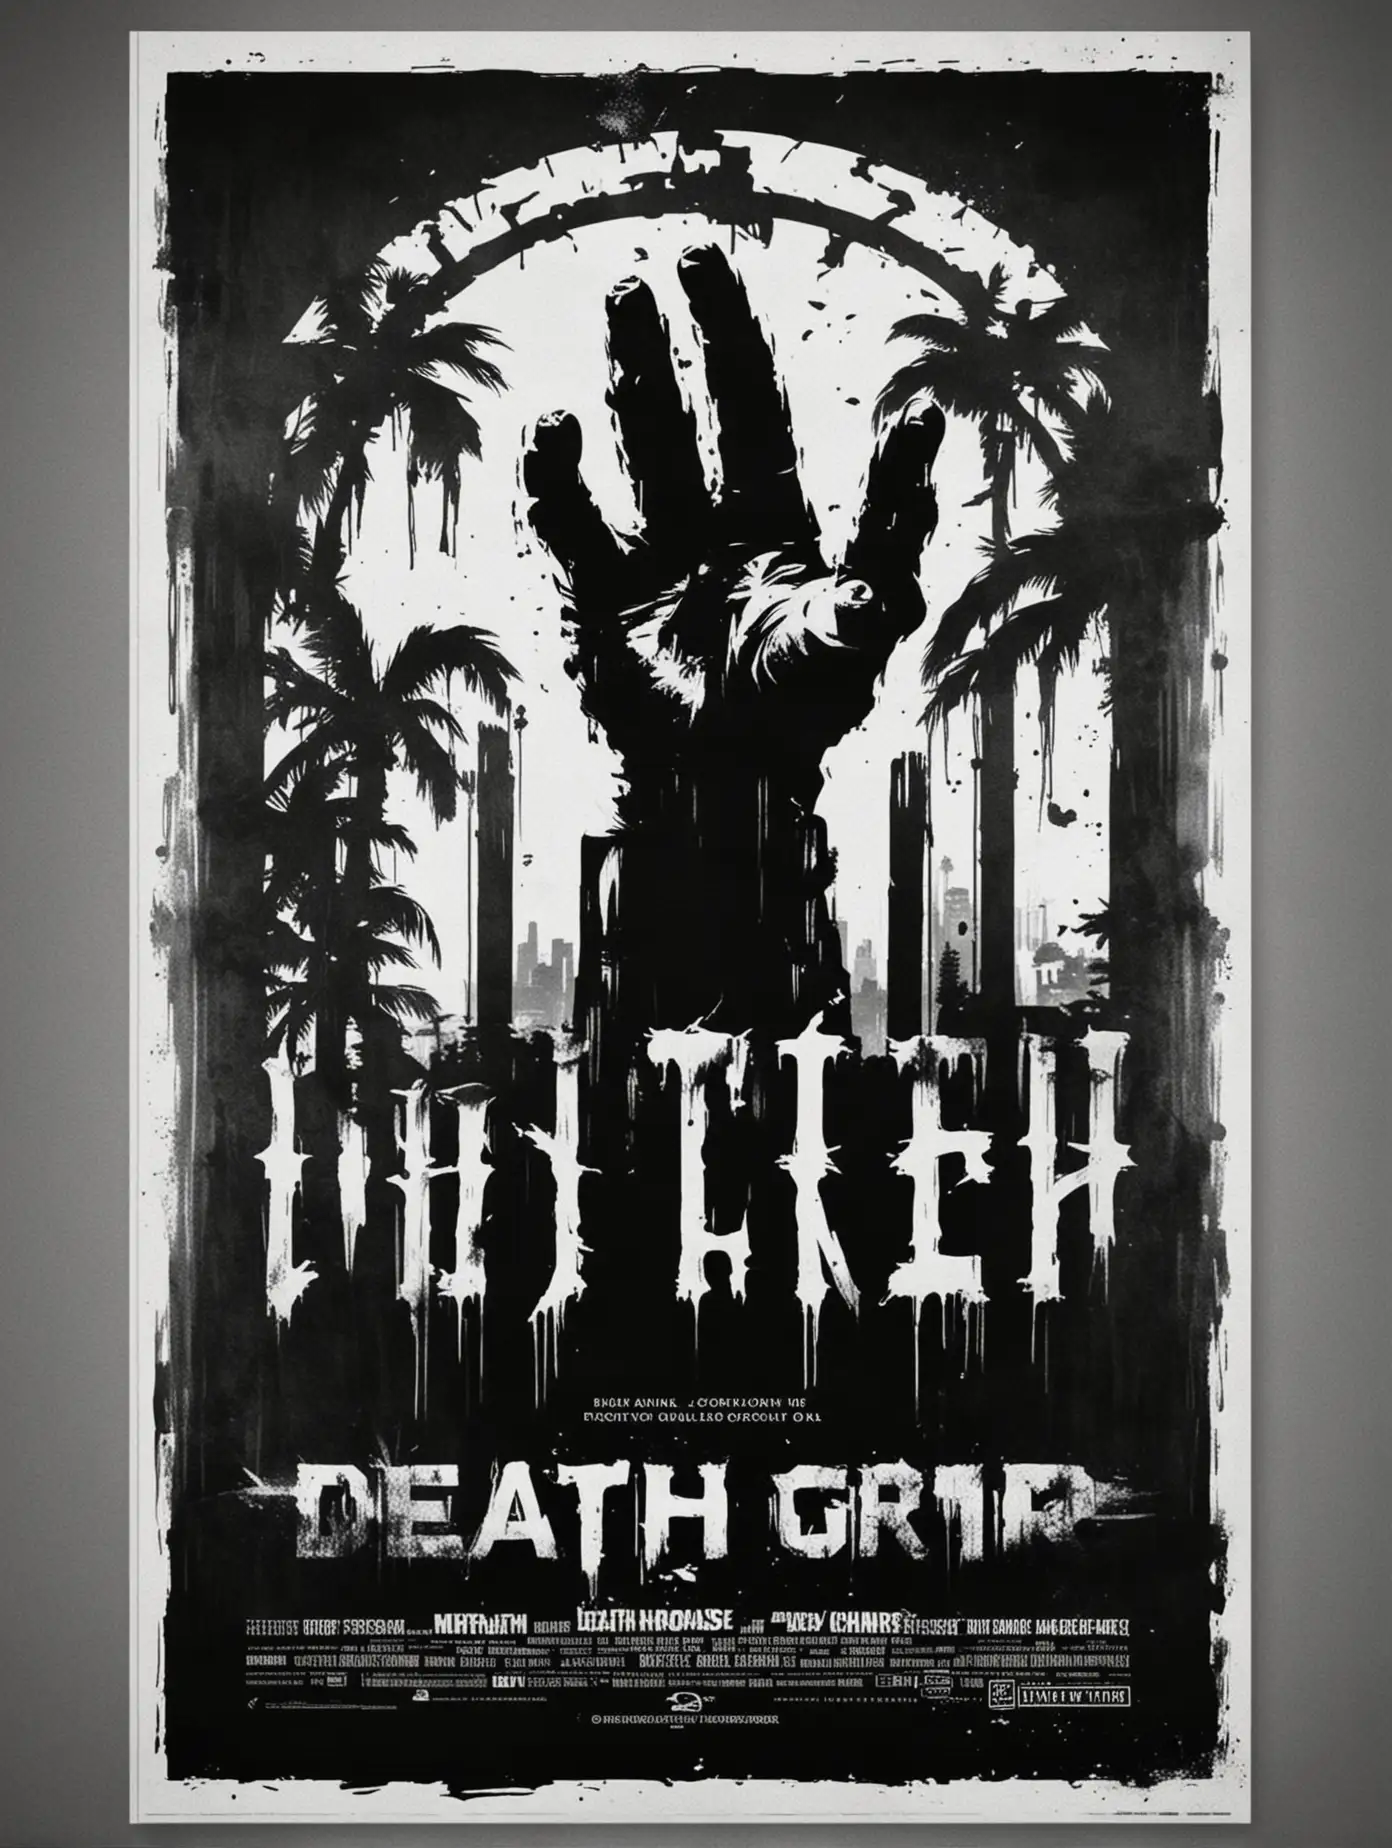 stencil, minimalist, simple, vector art, black and white, silhouette, negative space, grindhouse movie poster, "Death Grip" machine 